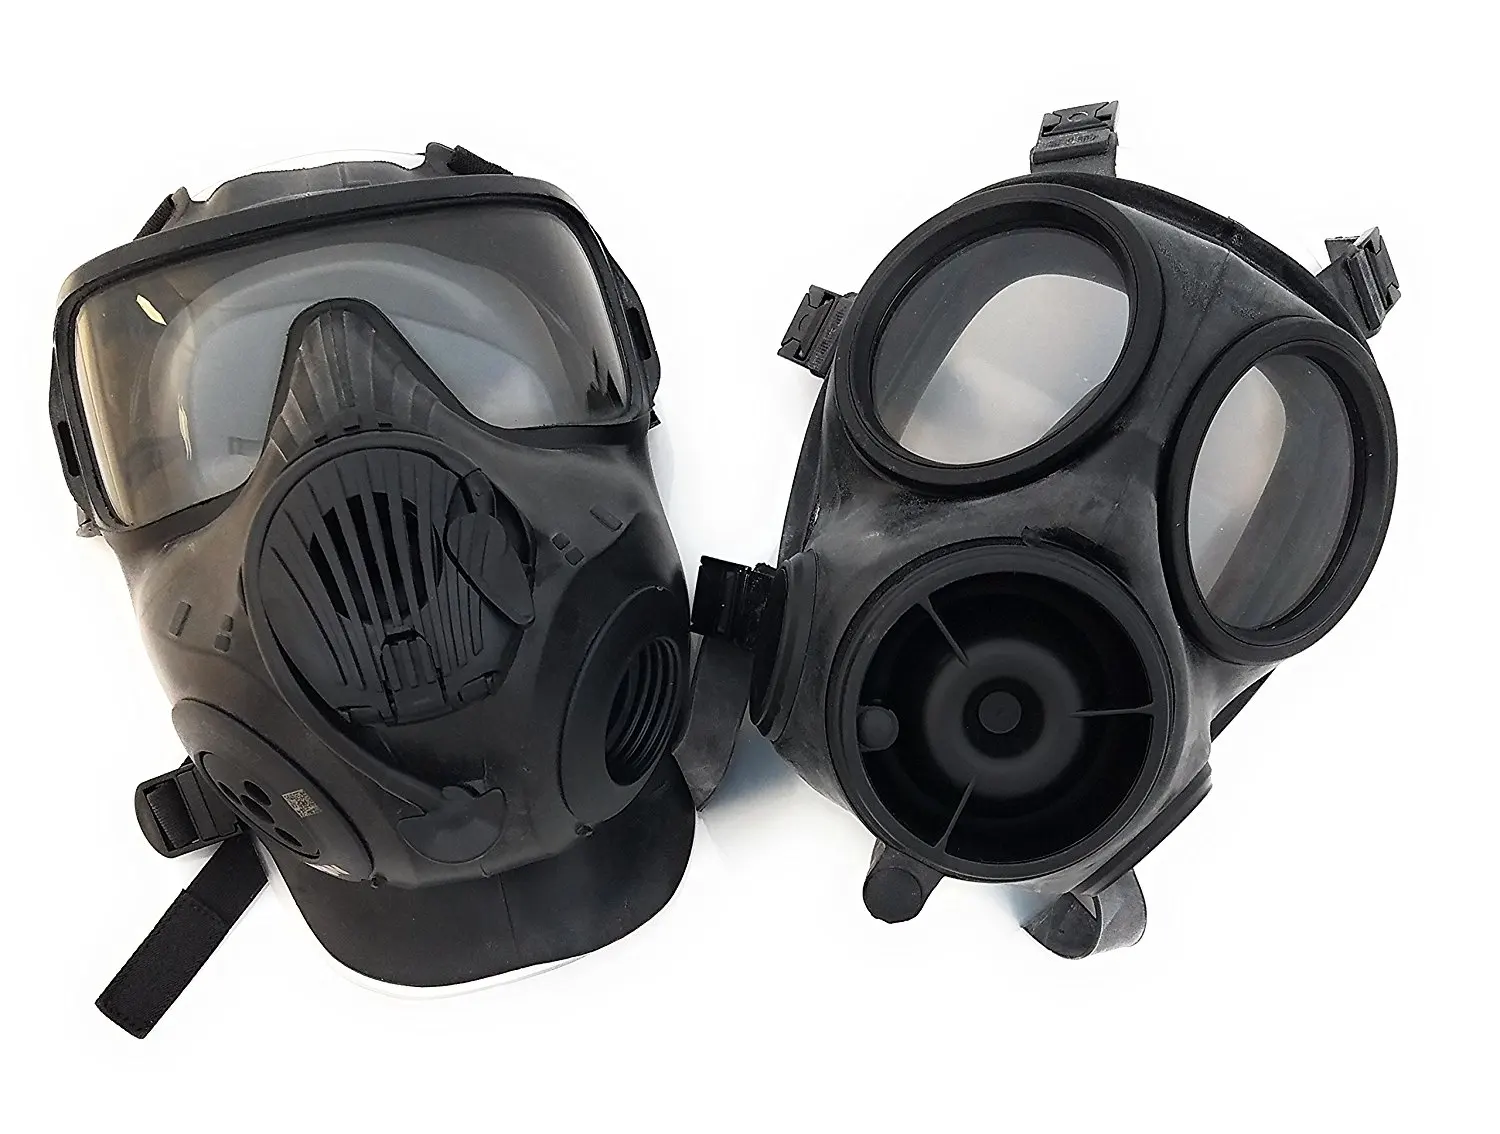 avon gas mask company